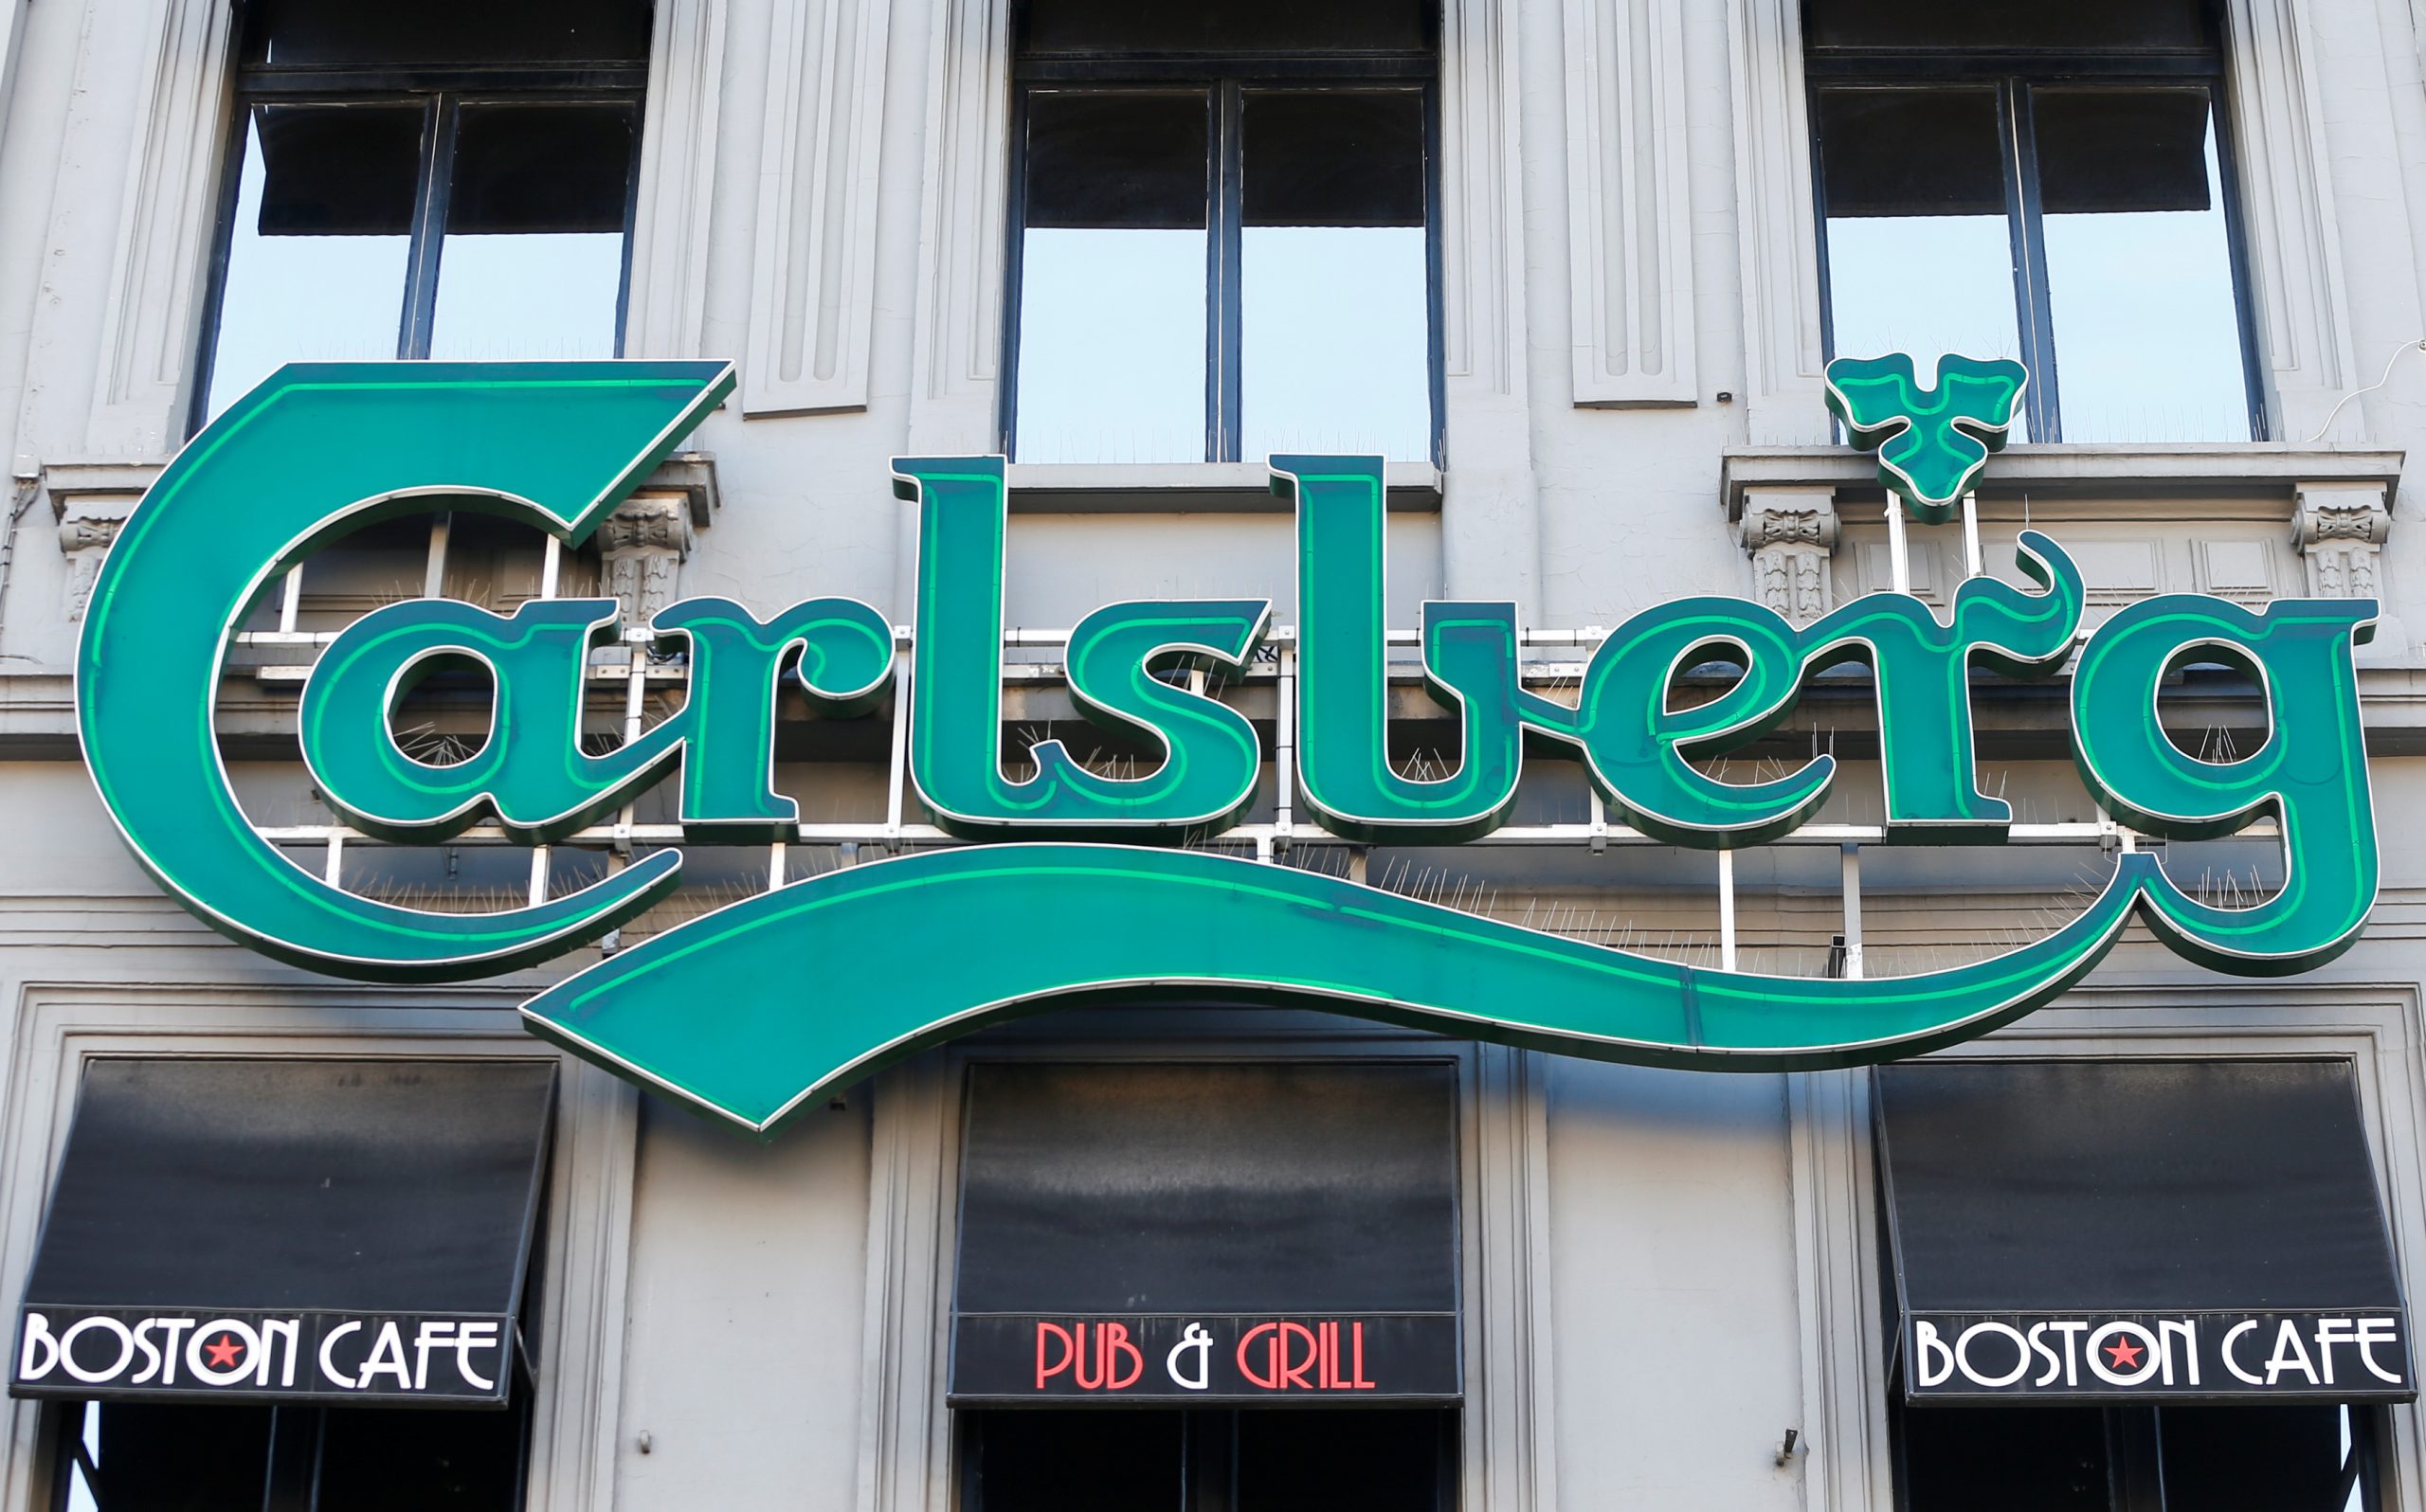  Carlsberg raises guidance as beer volumes recover